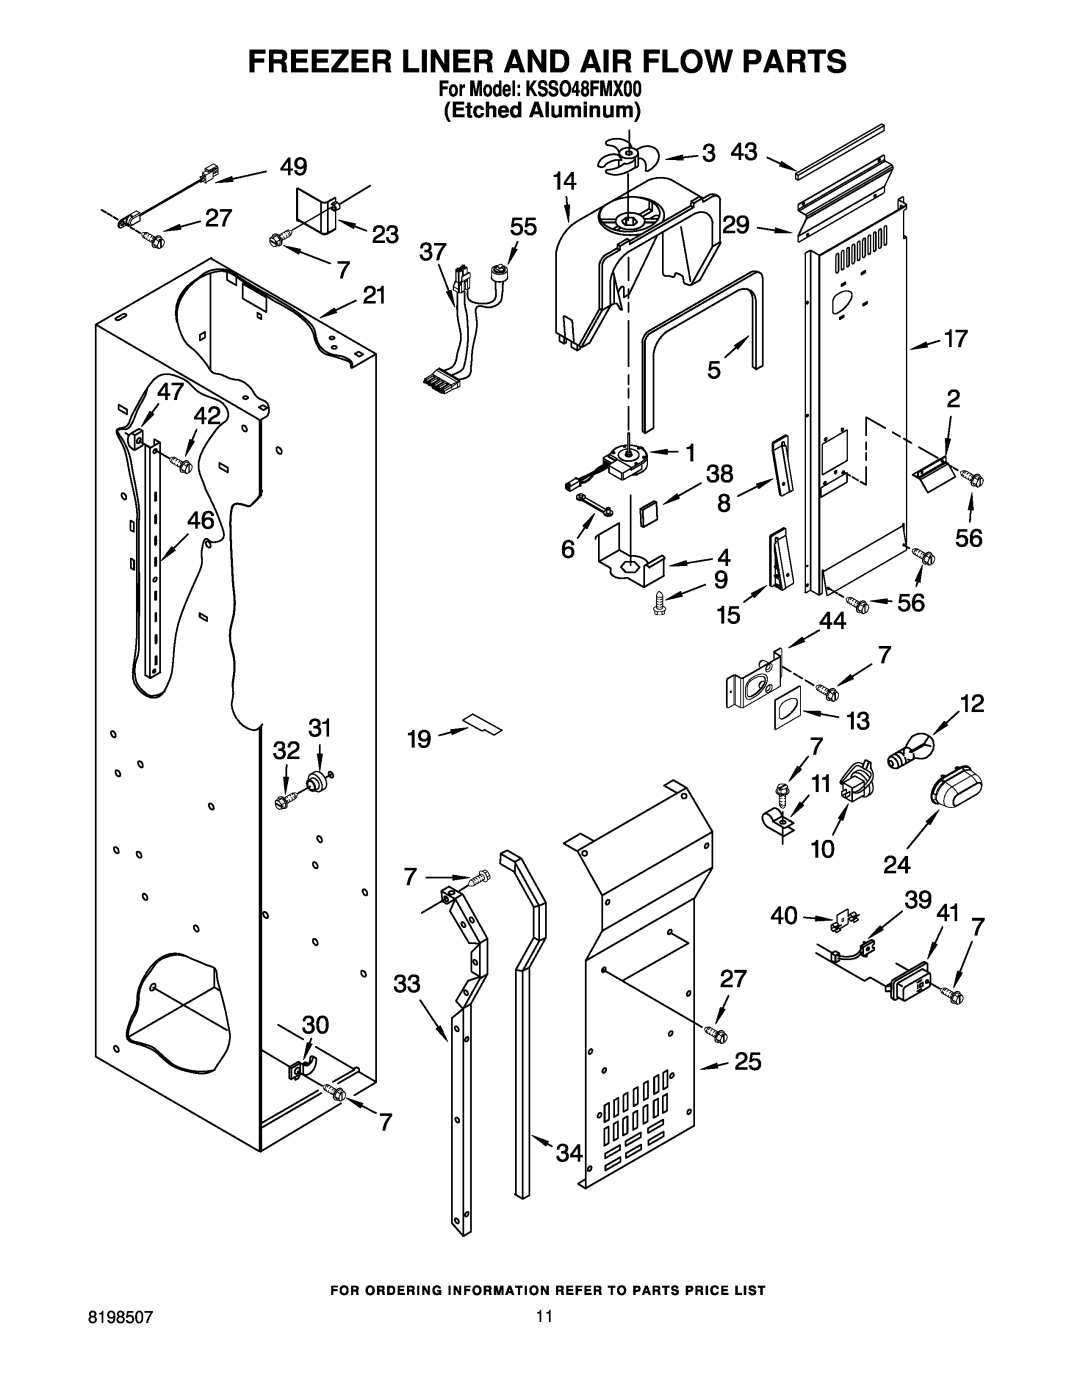 KitchenAid manual Freezer Liner And Air Flow Parts, For Model KSSO48FMX00 Etched Aluminum 